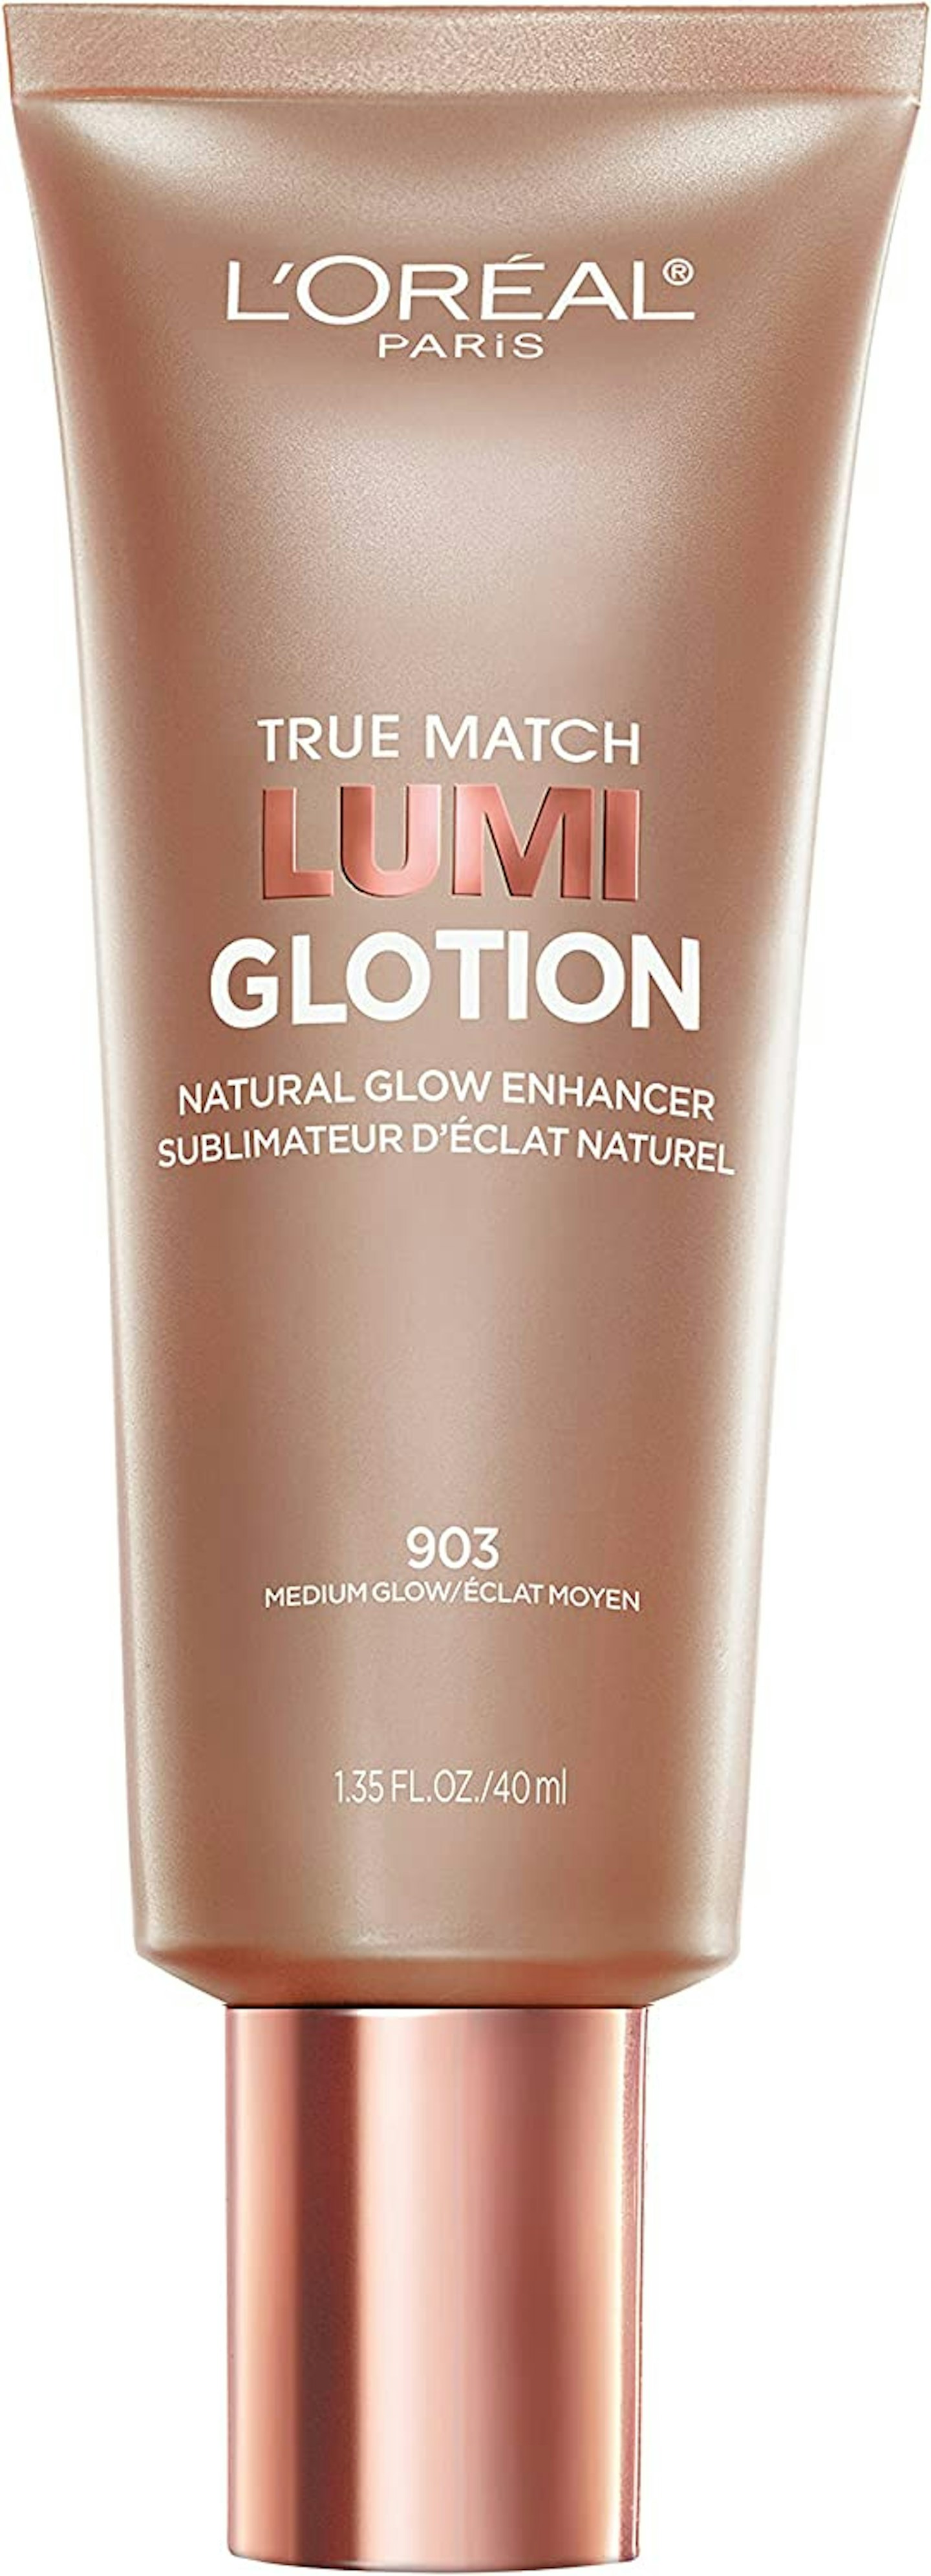 L'Oréal True Match Lumi Glotion Natural Glow Enhancer 903 Medium